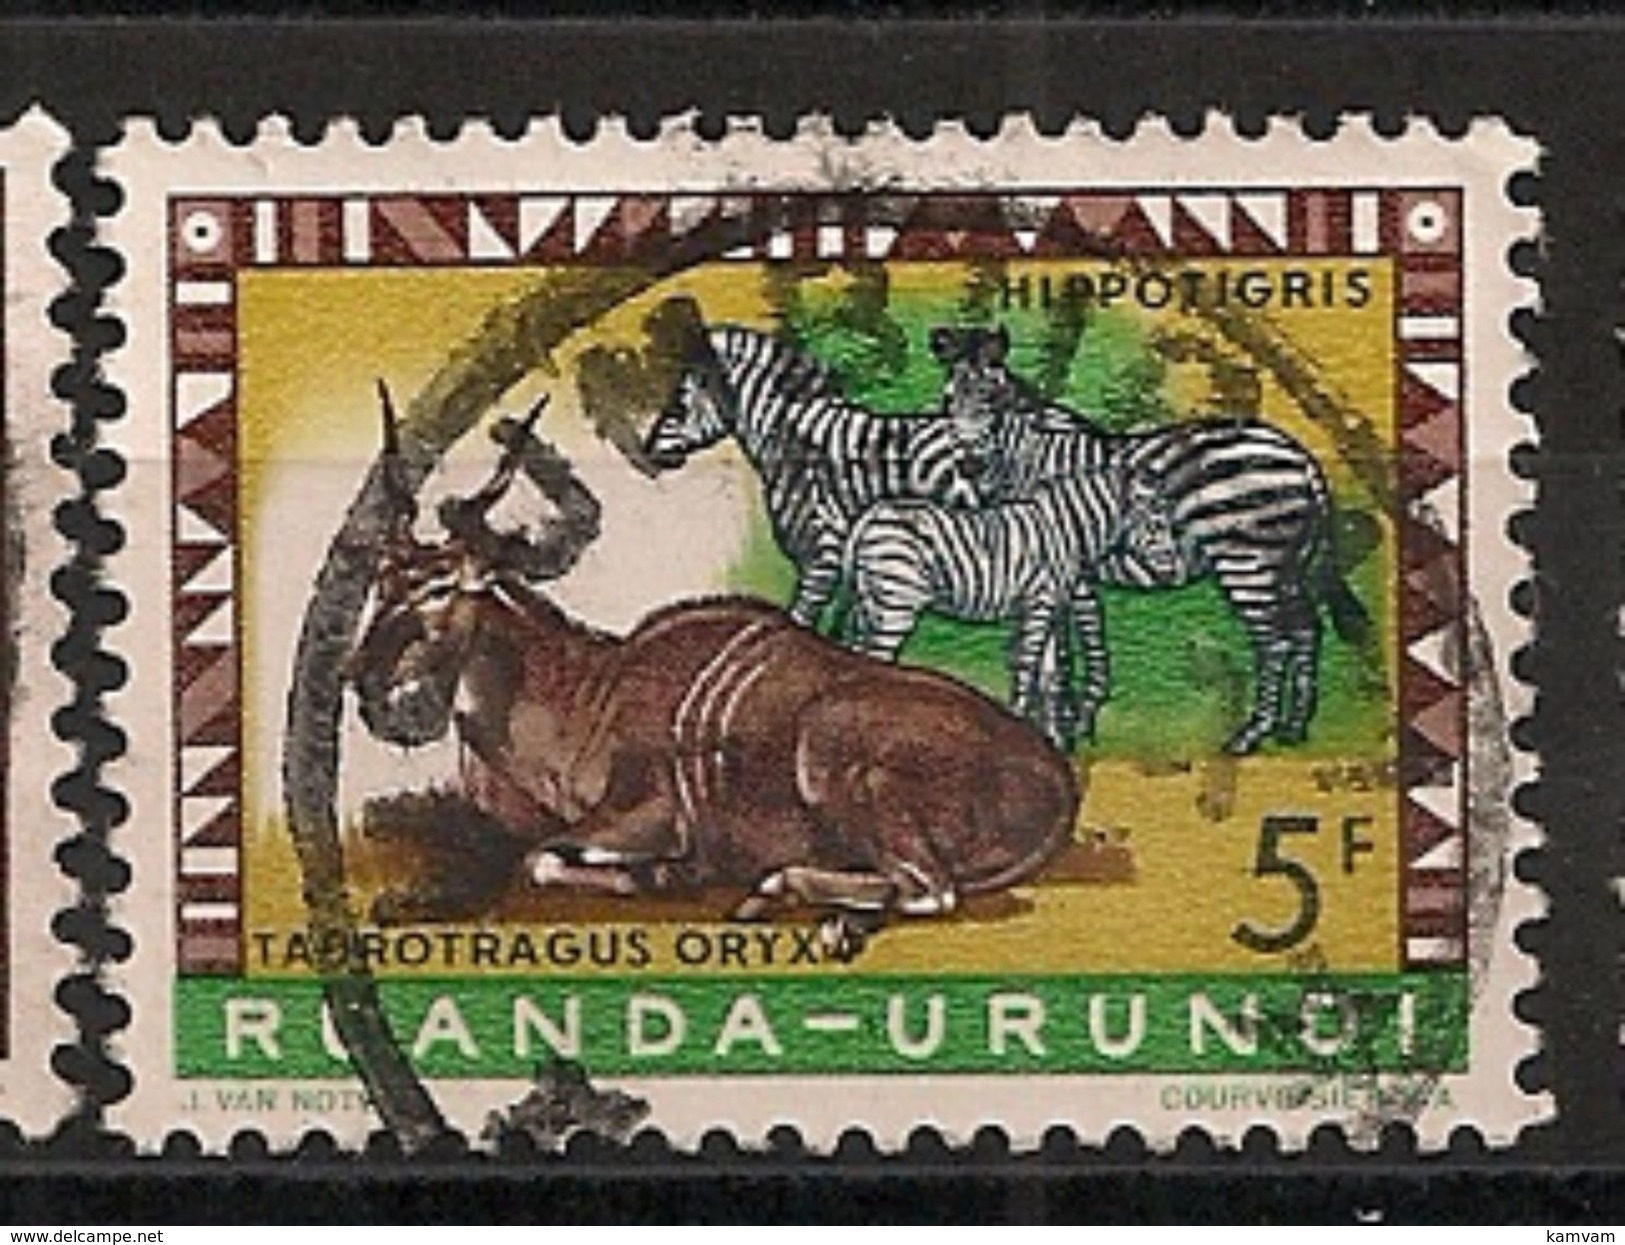 CONGO RUANDA URUNDI 213 USUMBURA - Usati